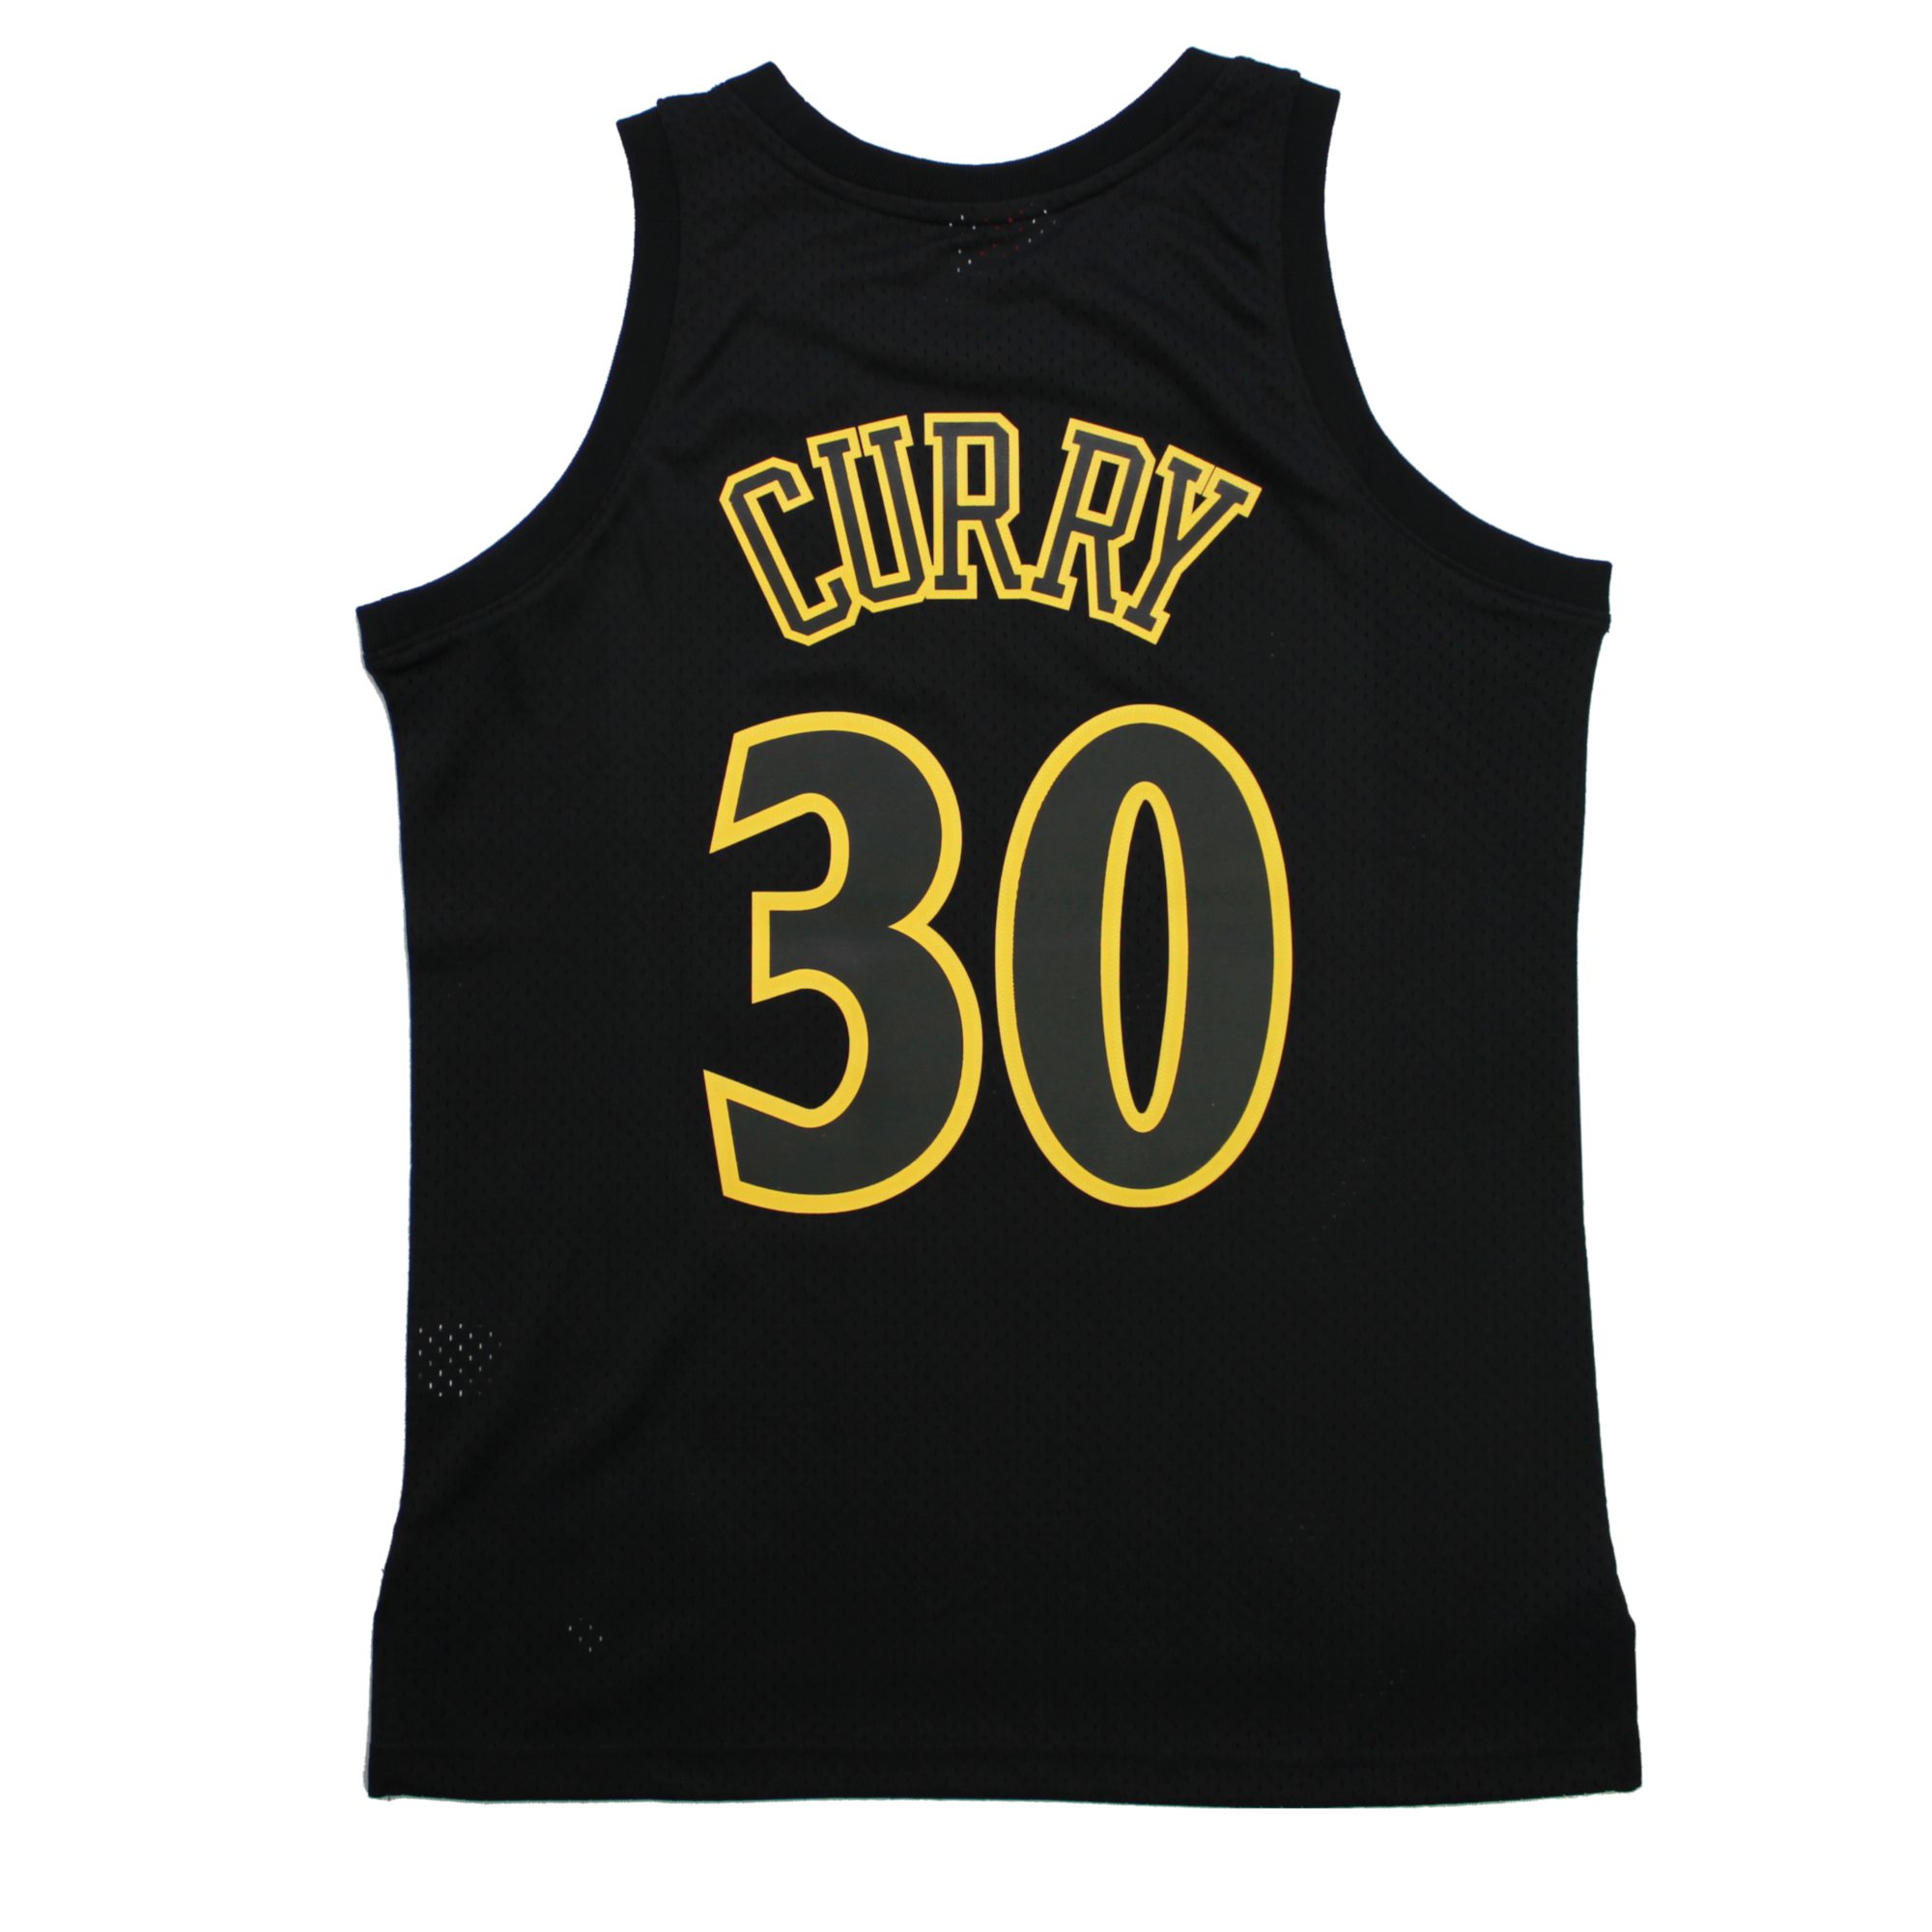 Stephen Curry Golden State Warrior 30 Swingman Jersey, XL Size - Black